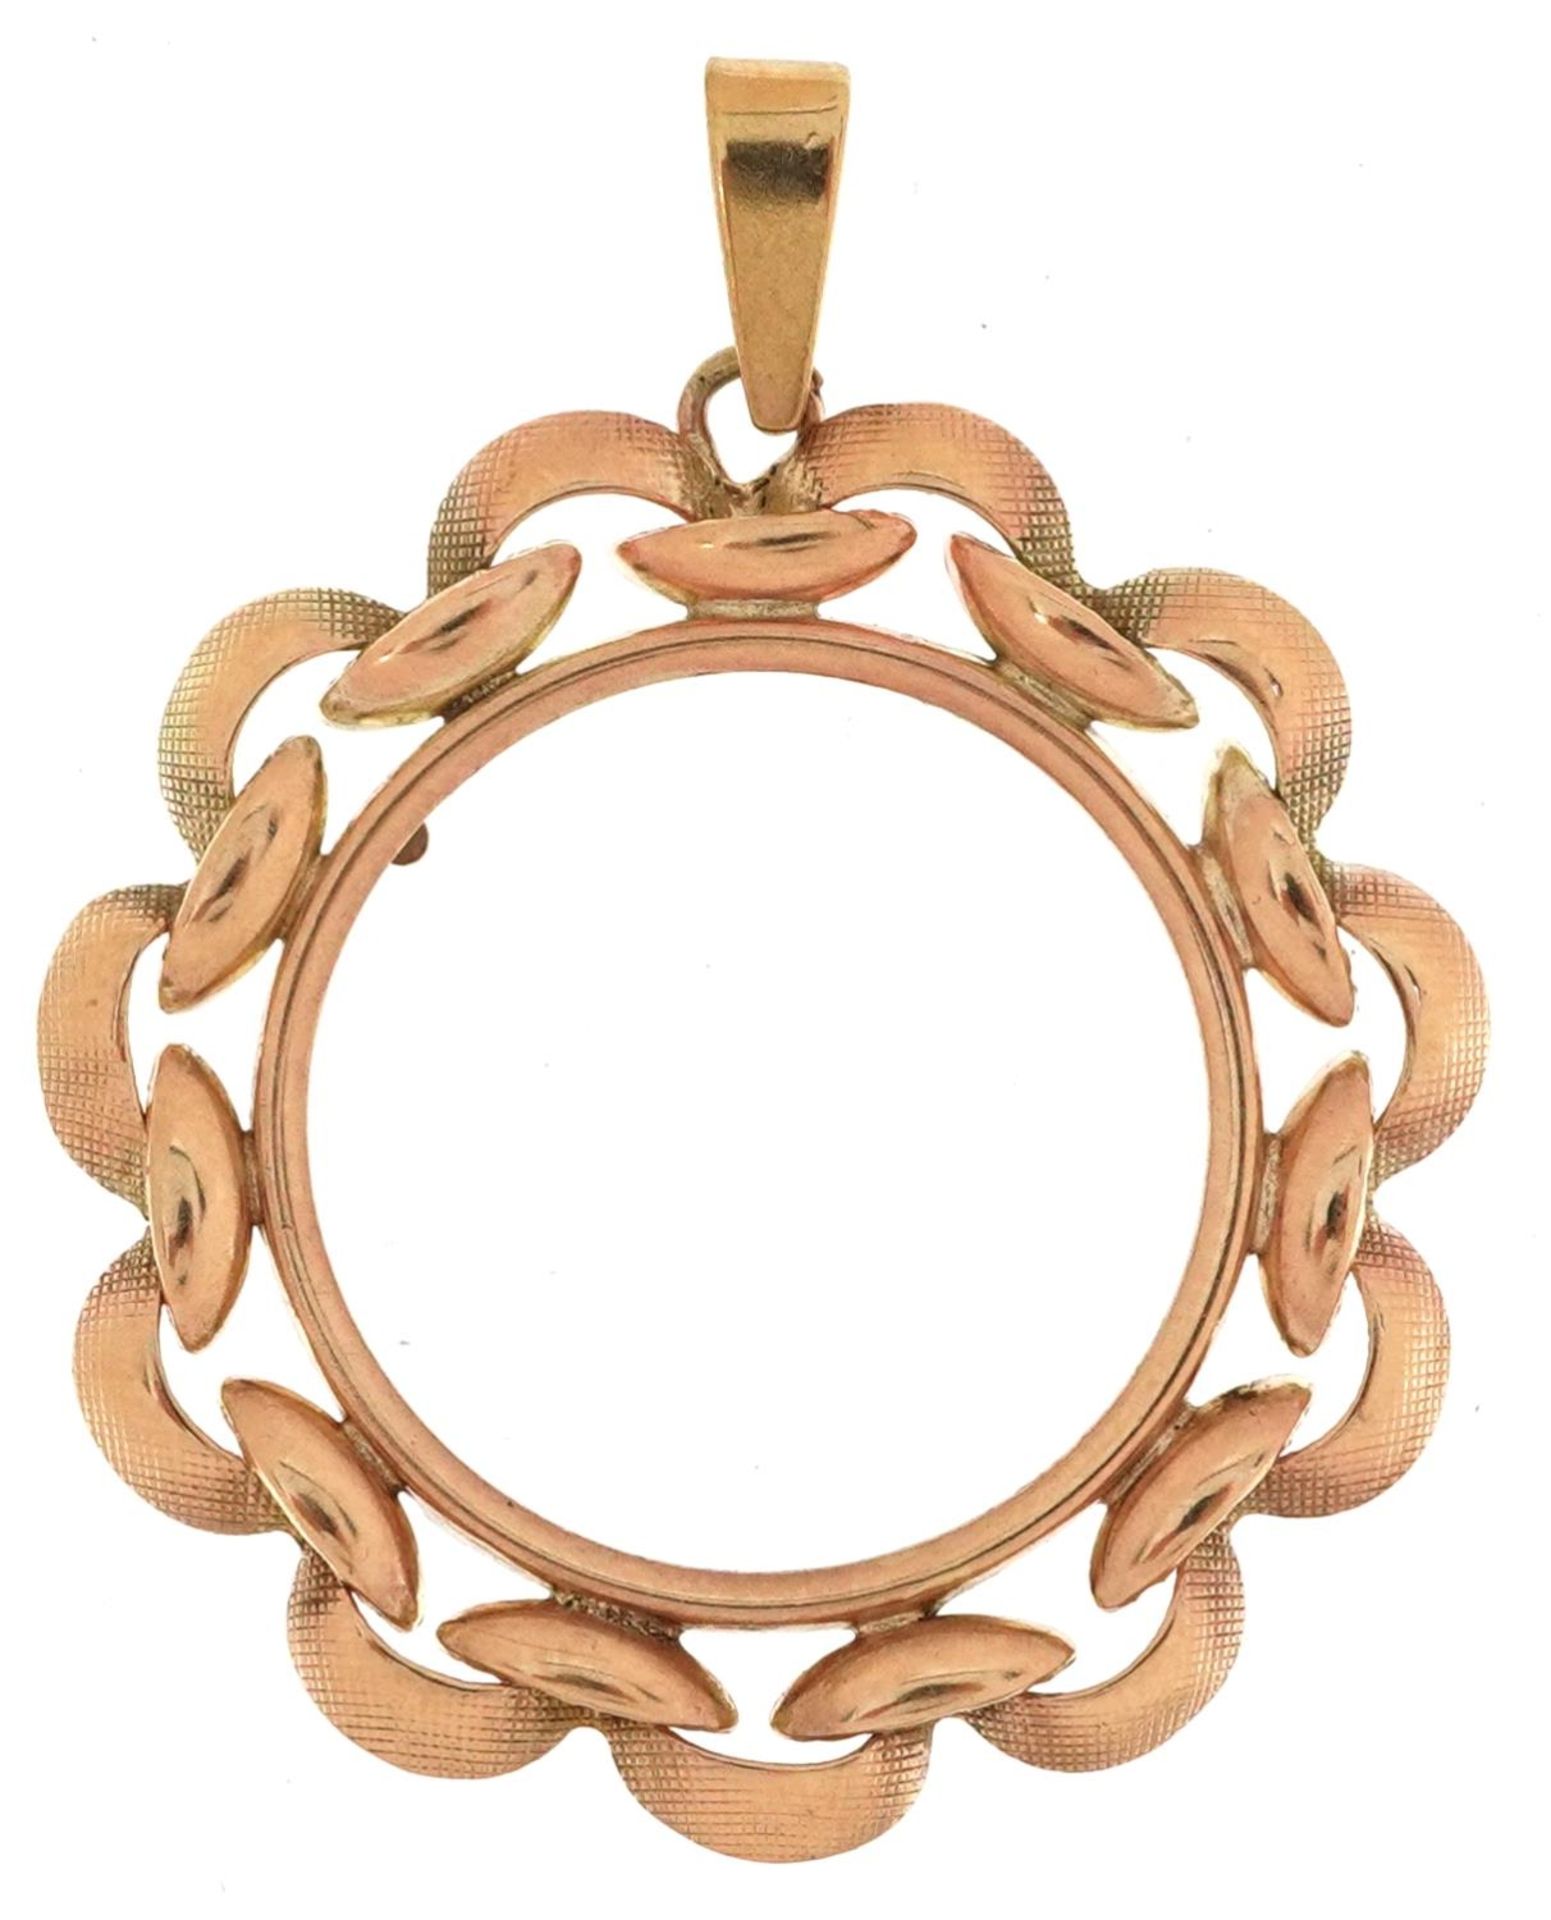 9ct gold sovereign pendant mount, 3.5cm in diameter, 2.6g